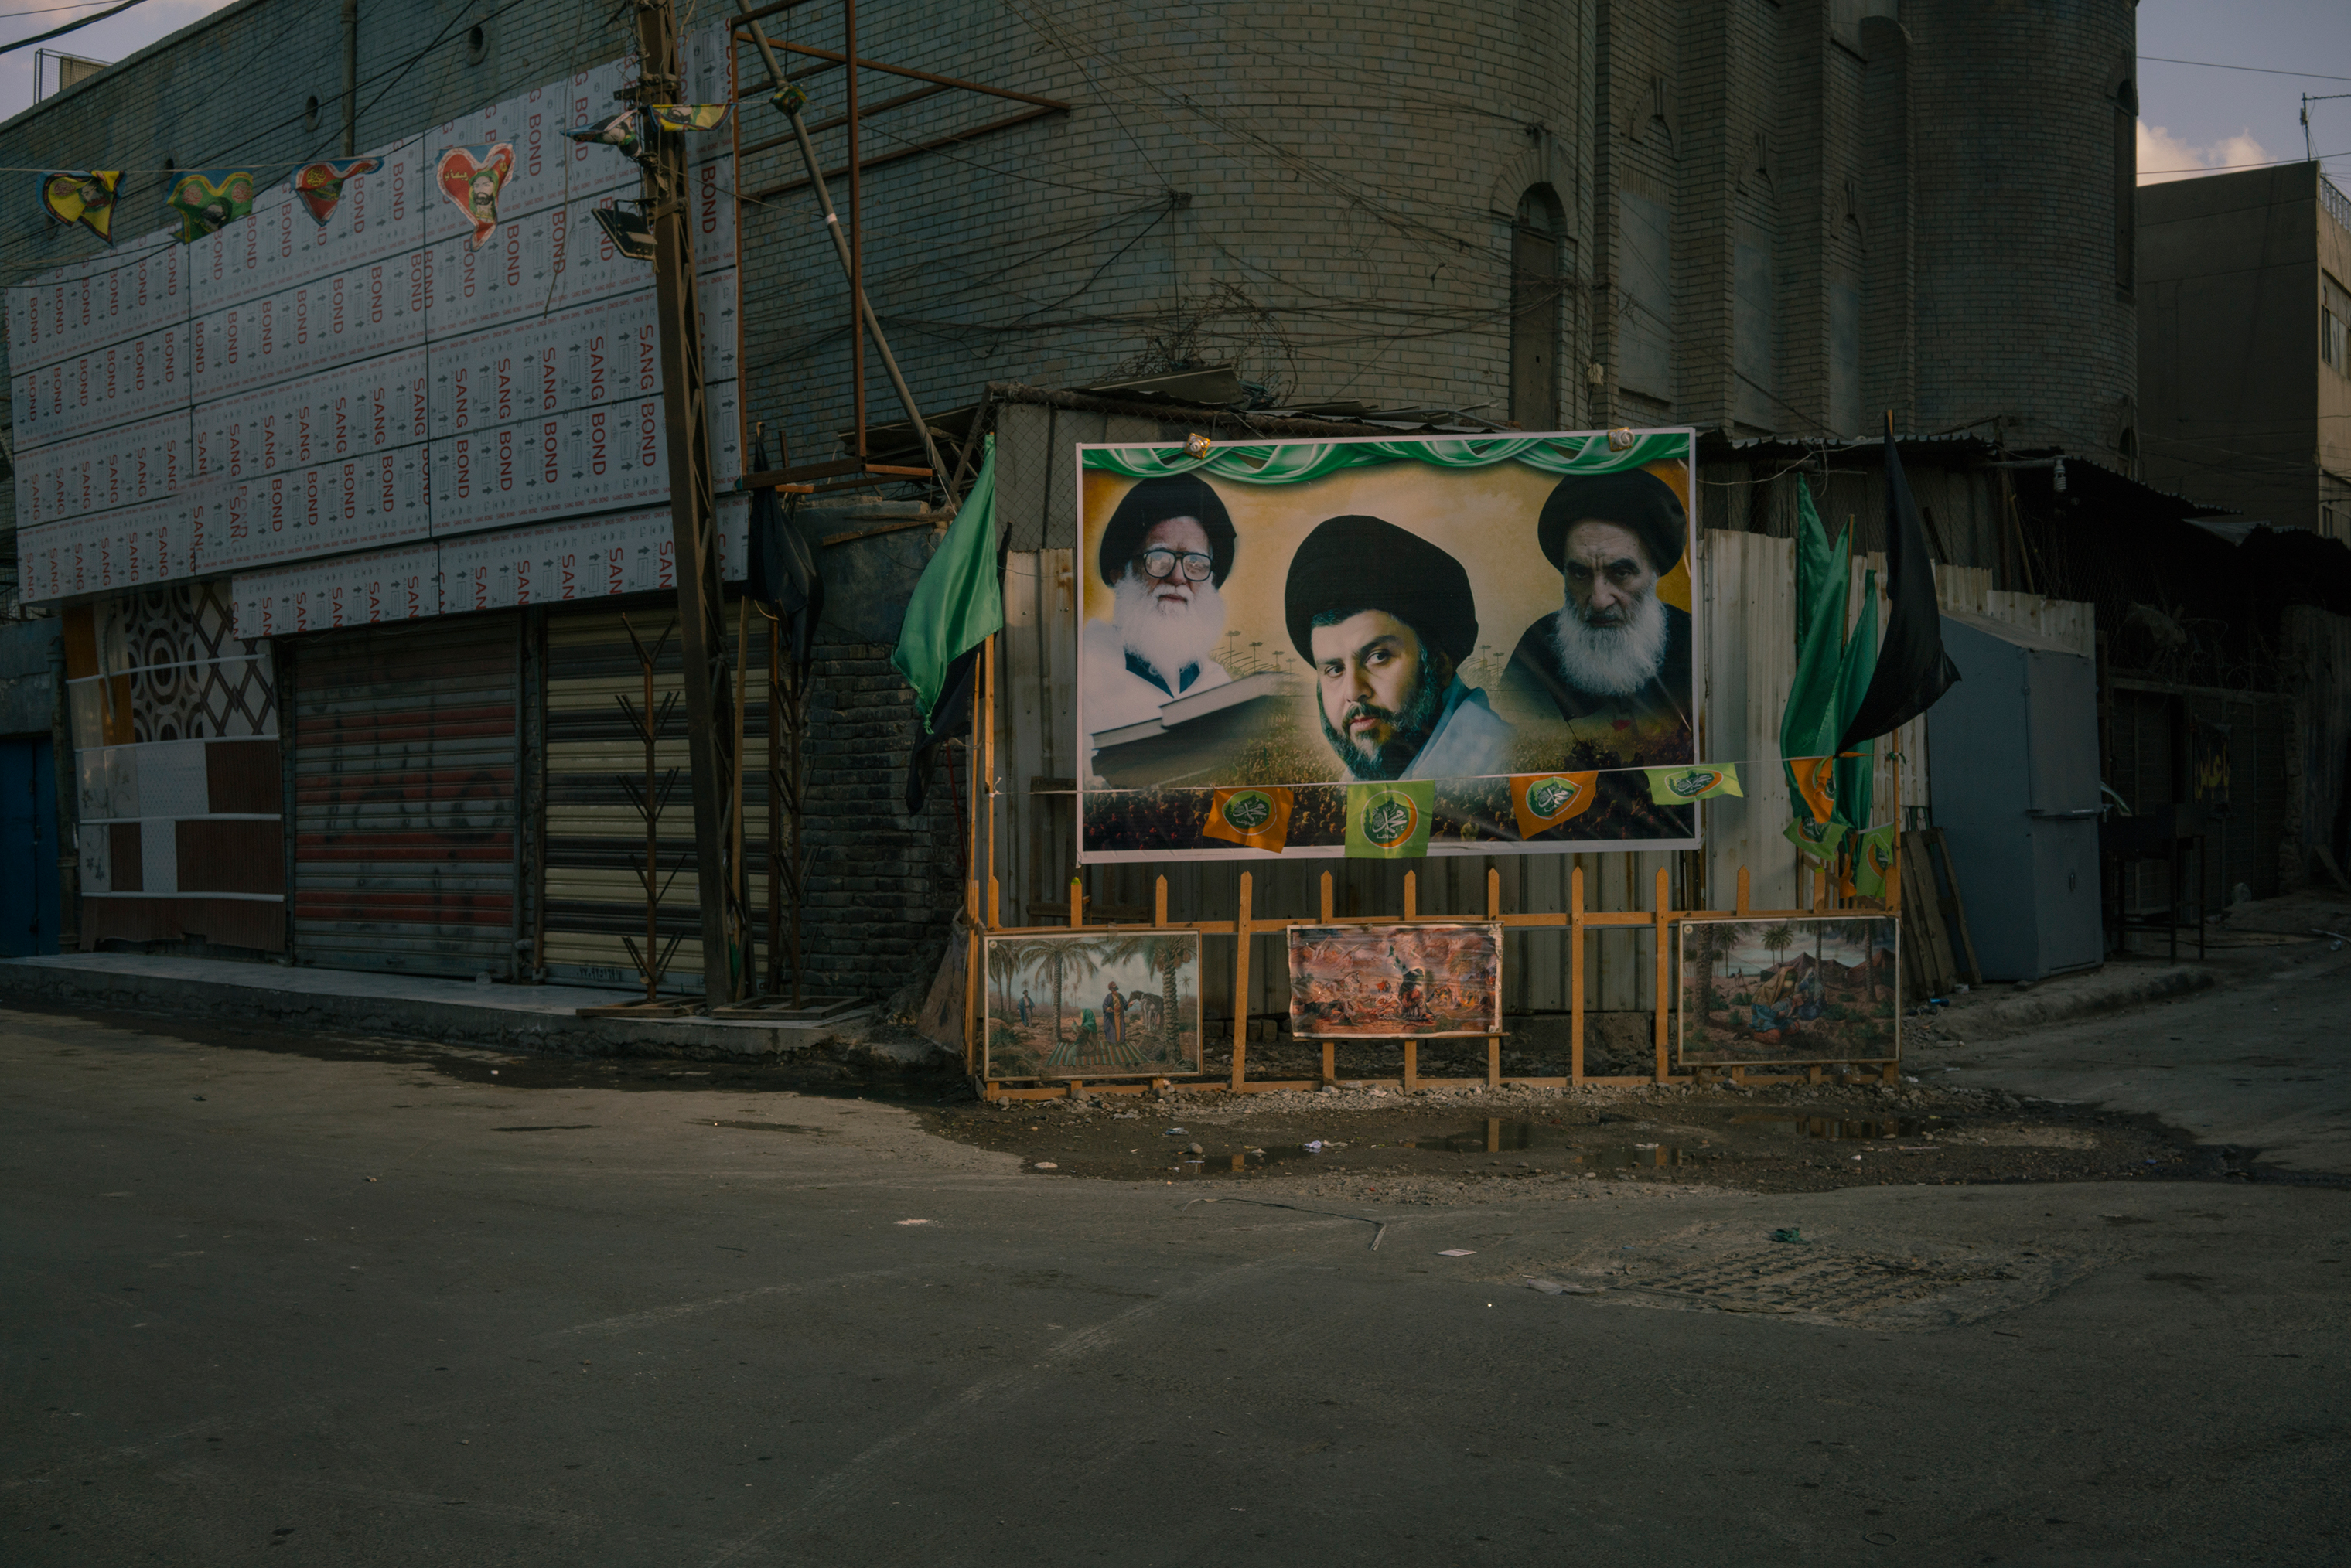 A billboard in Baghdad on Jan. 28 shows portraits of Shi‘ite spiritual leaders, from left, Mohammad Sadeq al-Sadr, Muqtada al-Sadr and Ali al-Sistani. (Emanuele Satolli for TIME)